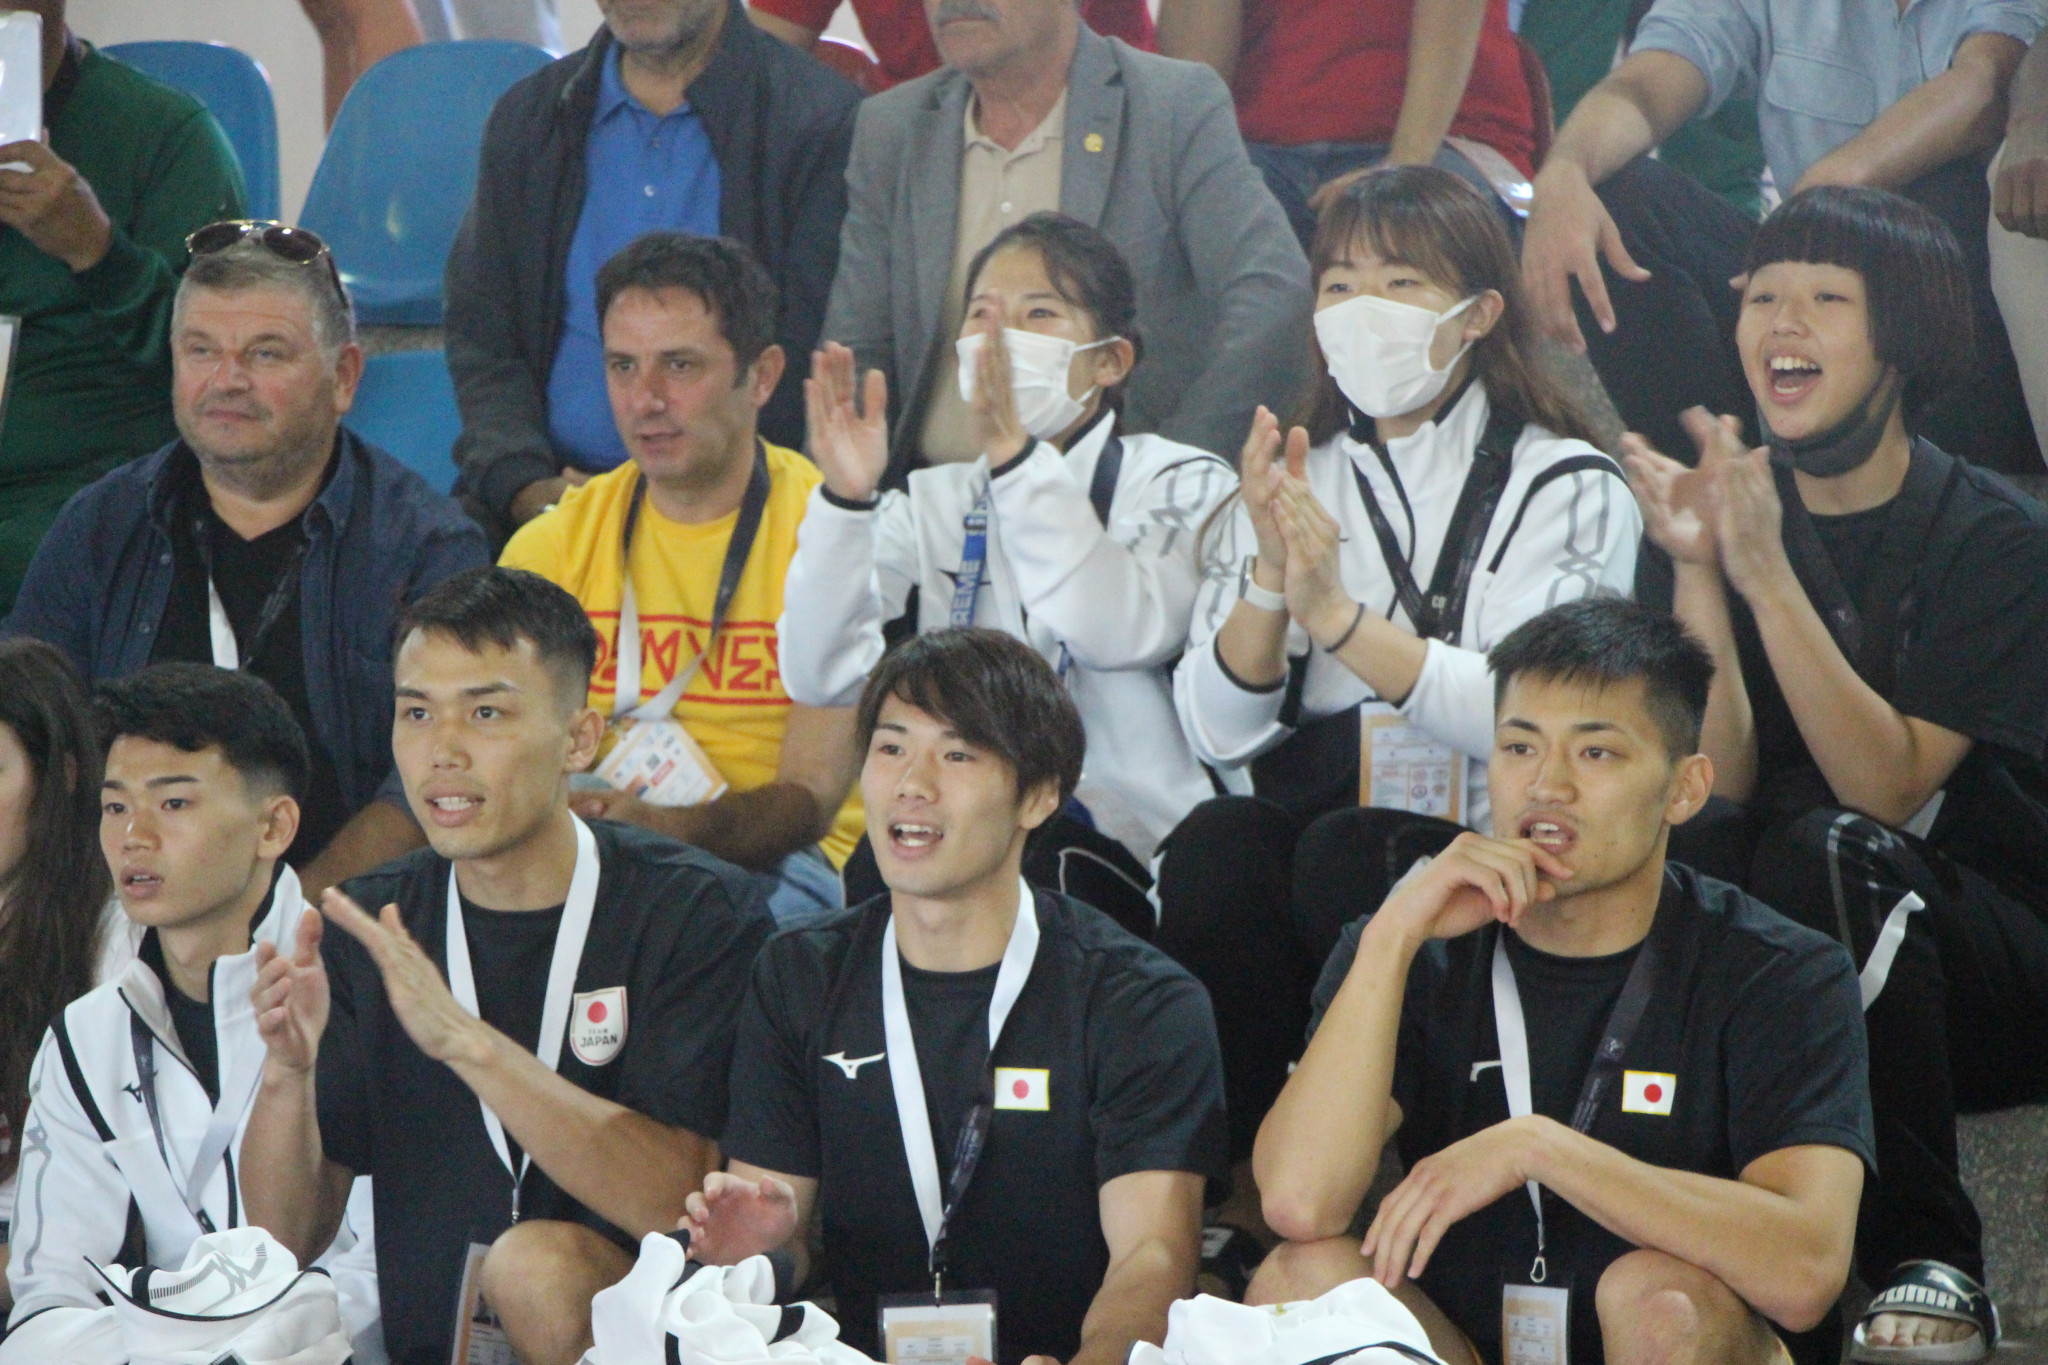 The Japanese team cheering on their team-mates ©FISU